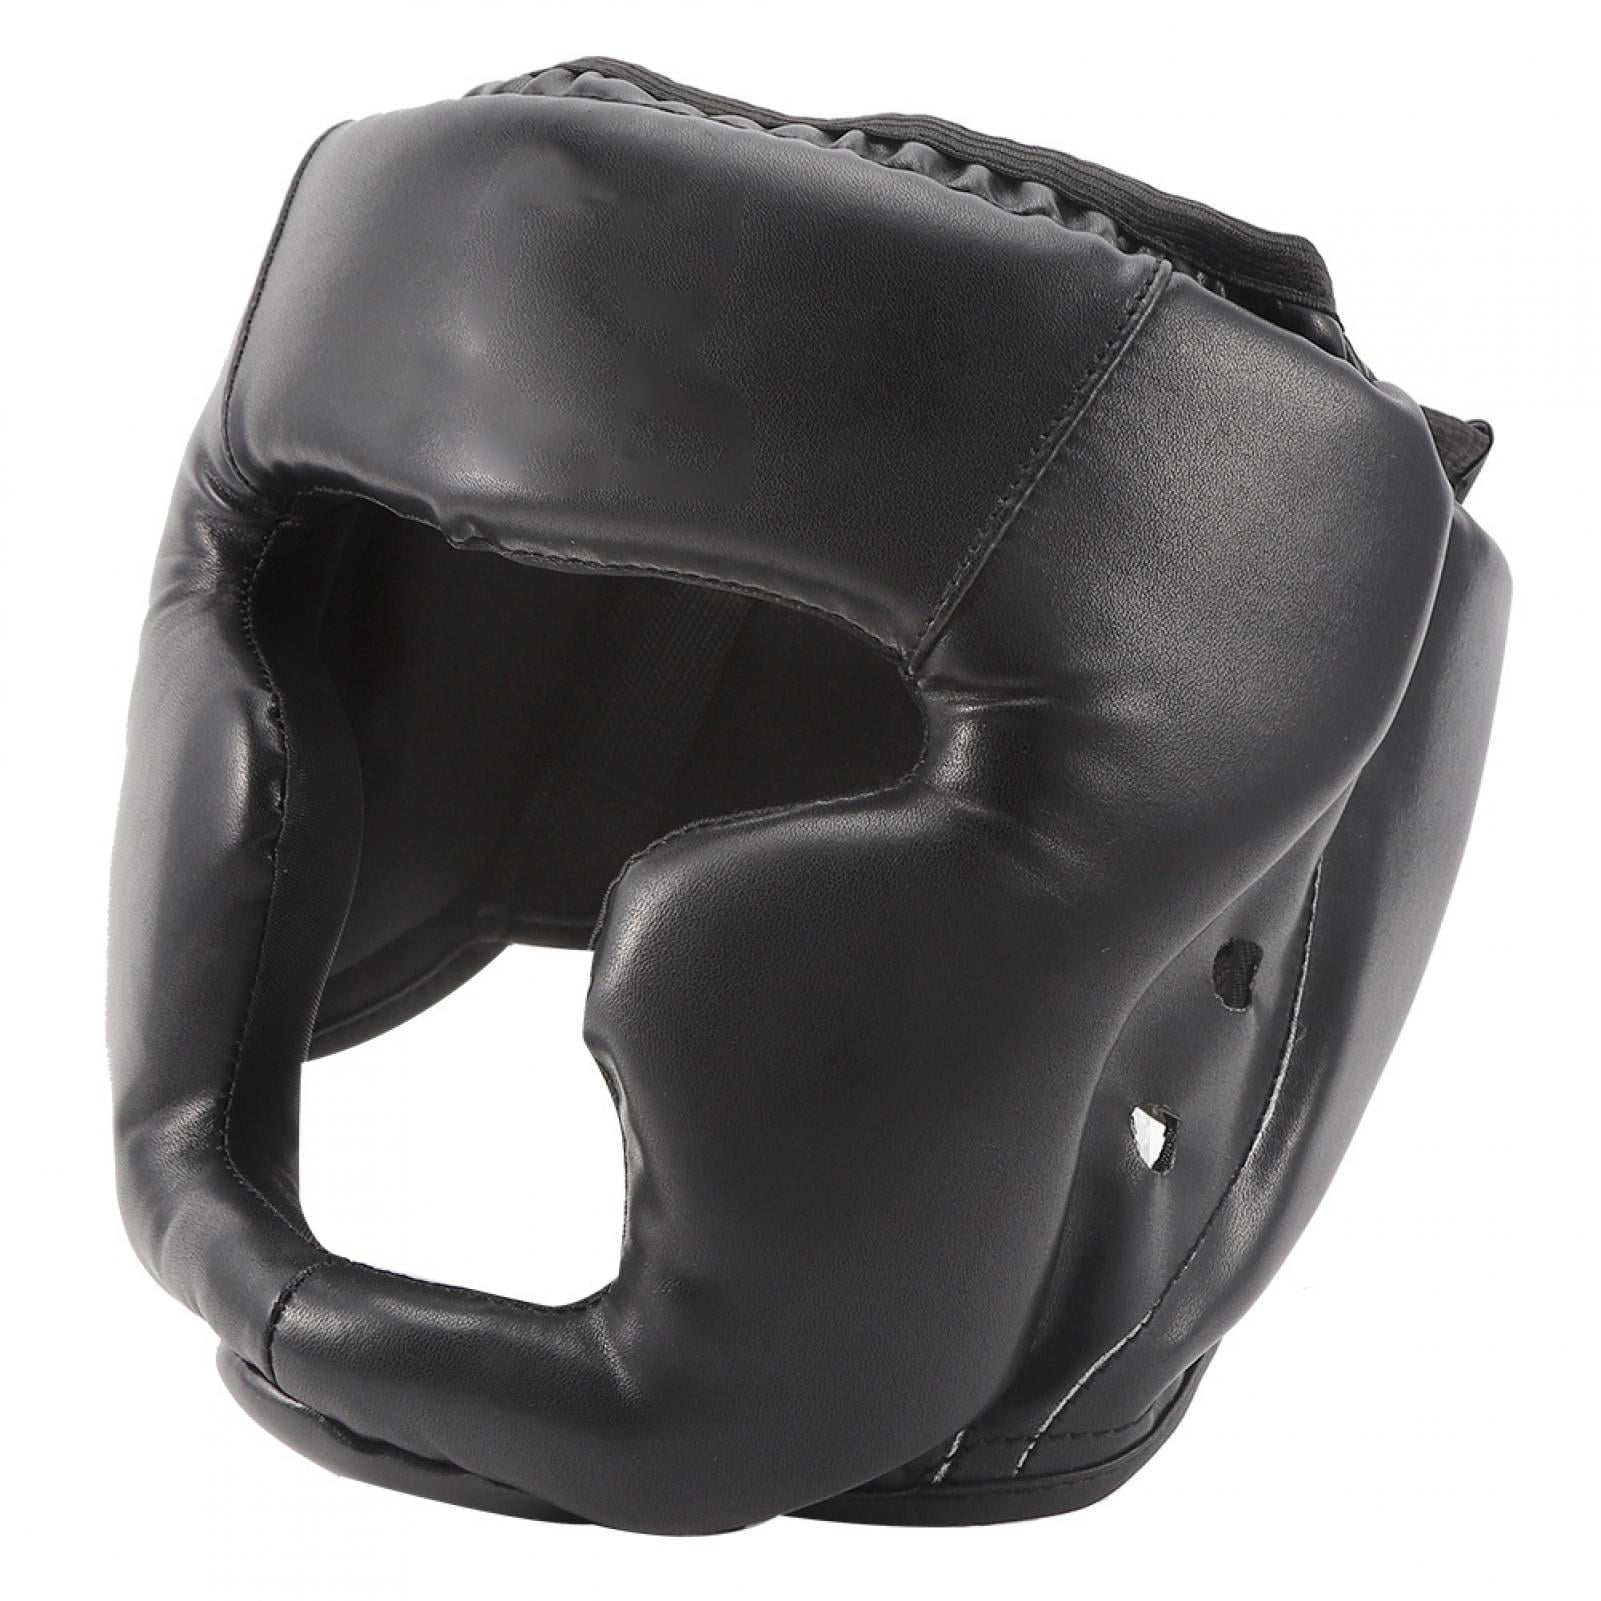 Genuine Closed Kick Boxing Helmet Sanda Muay Thai Boxing Head Protection Gear zx 